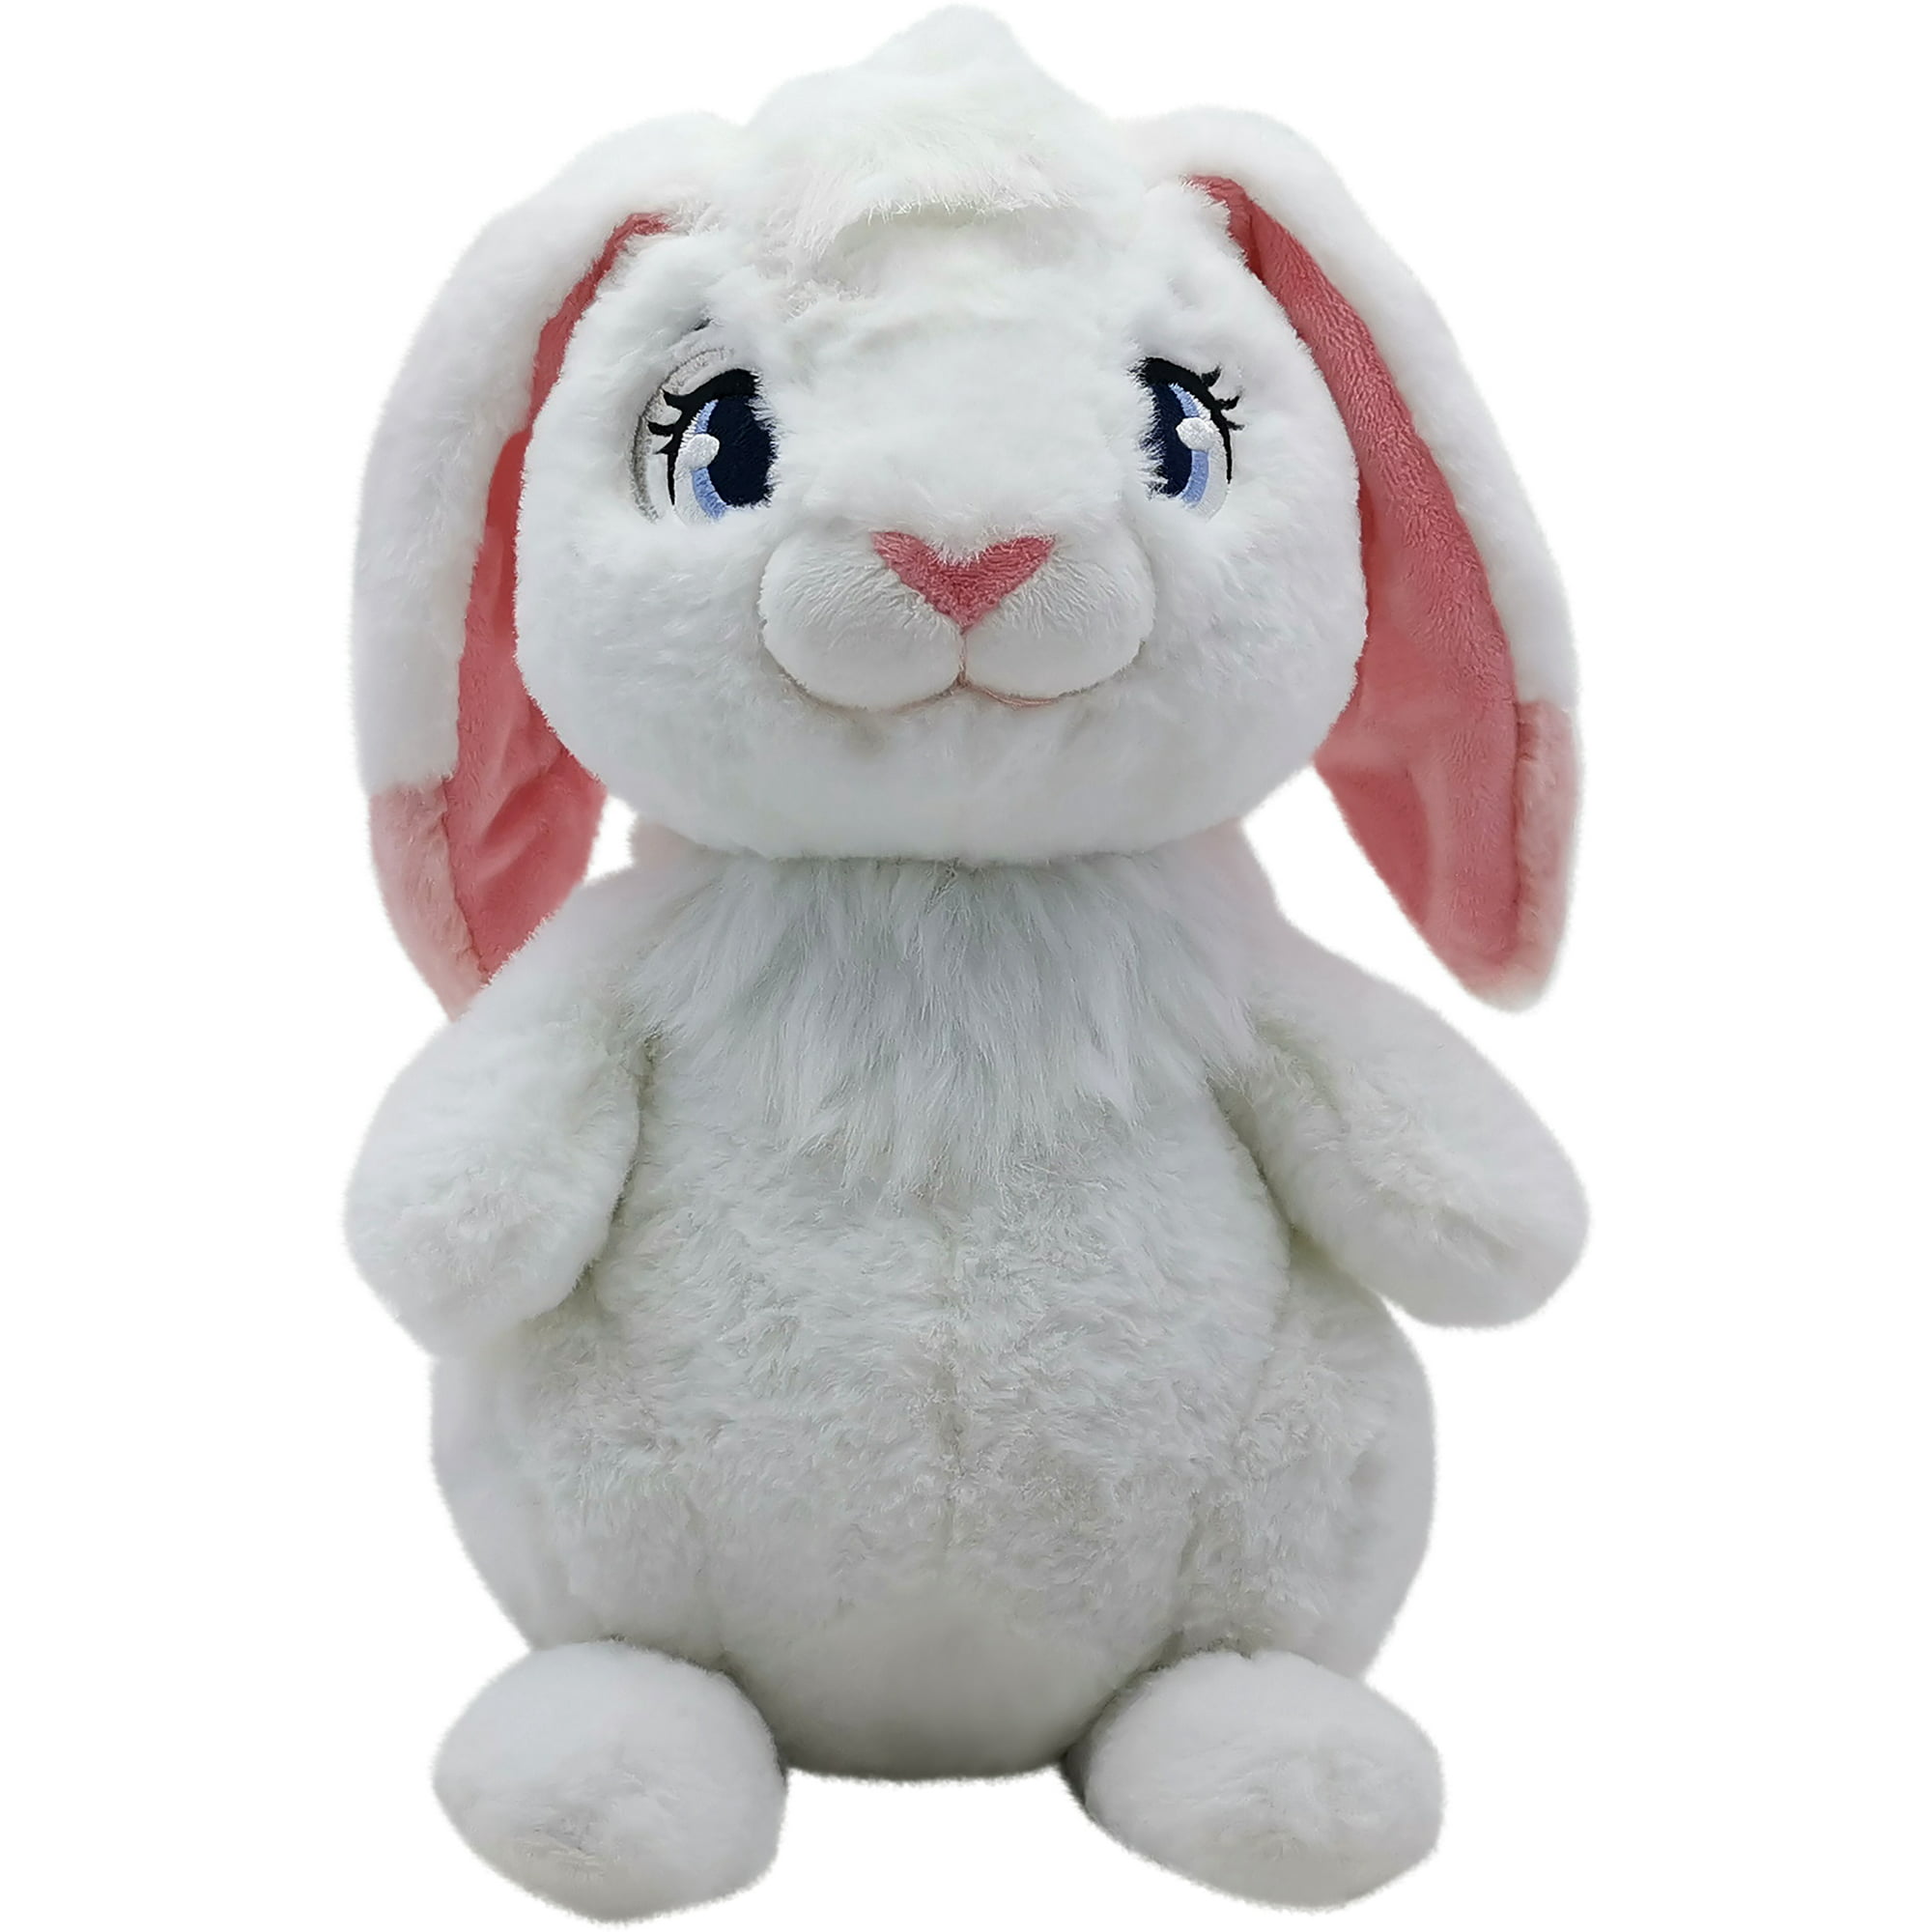 12 Over The Moon Kids Fun Play Indoor Girls Gift Rabbit Stuff Toy Bungee Plush Ebay